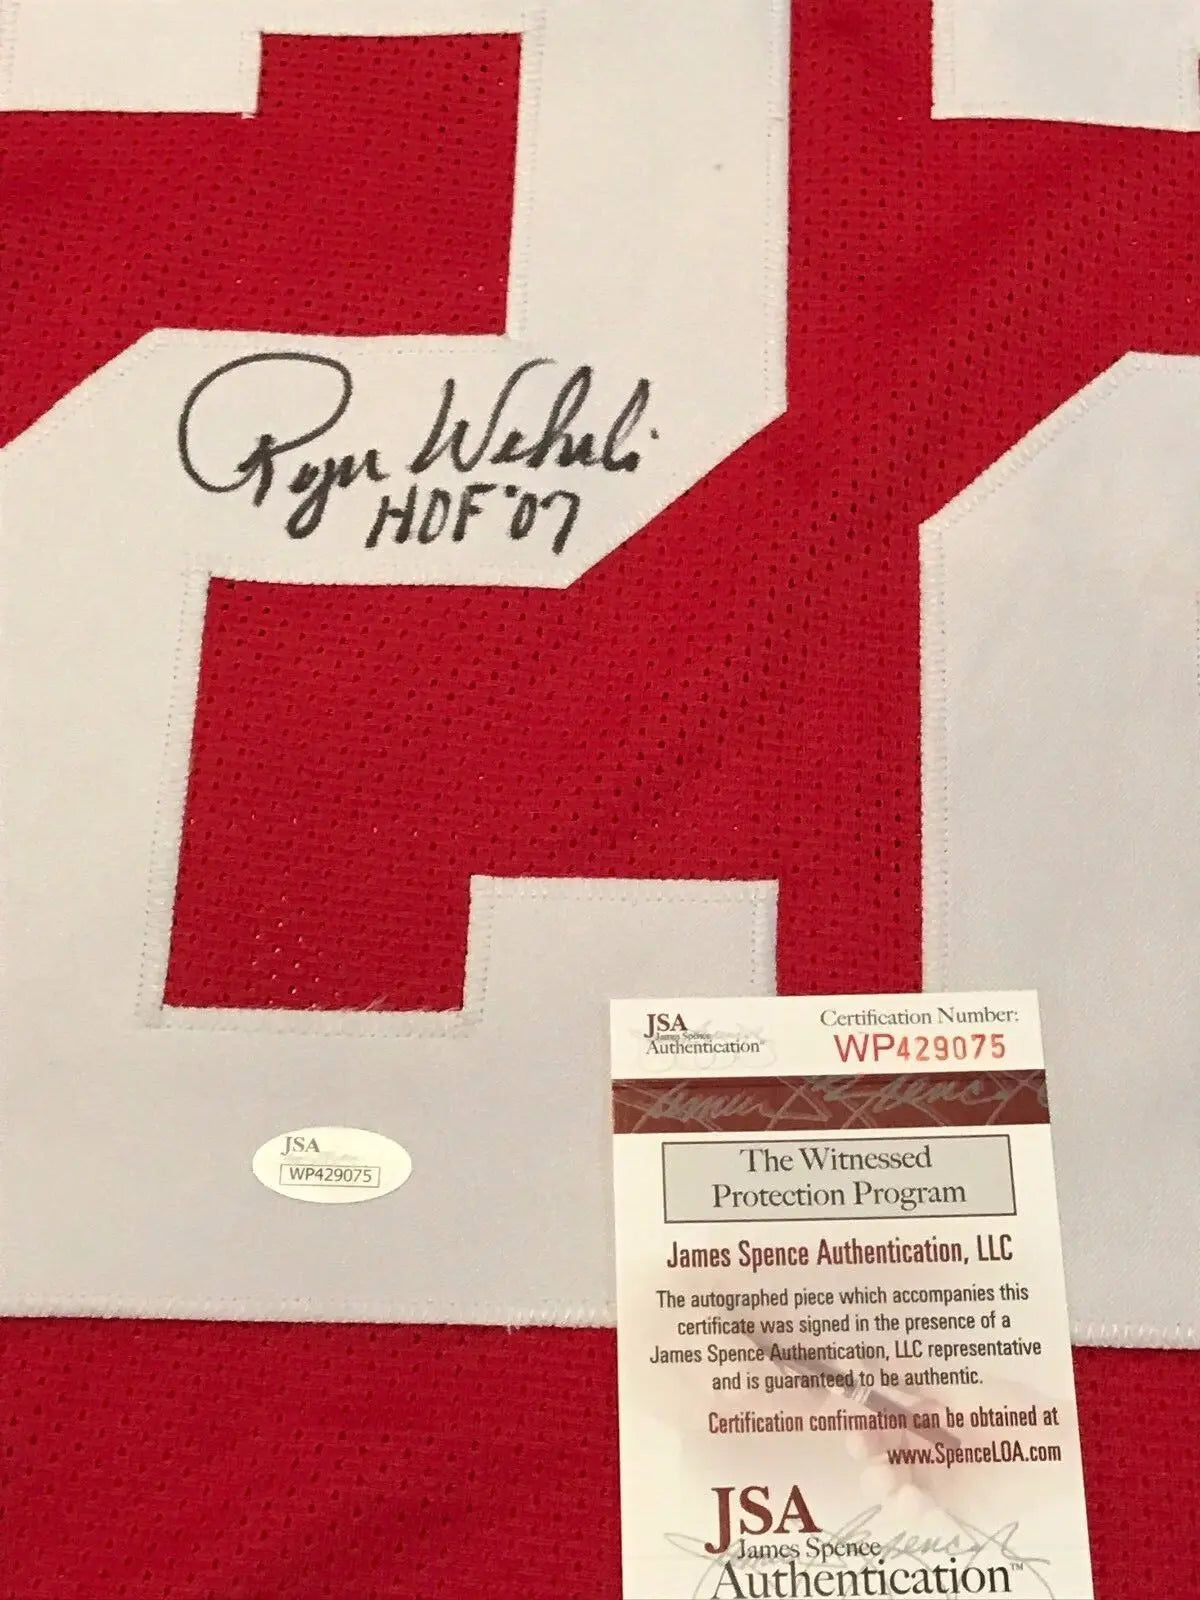 MVP Authentics Roger Wehrli Autographed Signed Inscrebed St. Louis Cardinals Jersey Jsa Coa 98.10 sports jersey framing , jersey framing